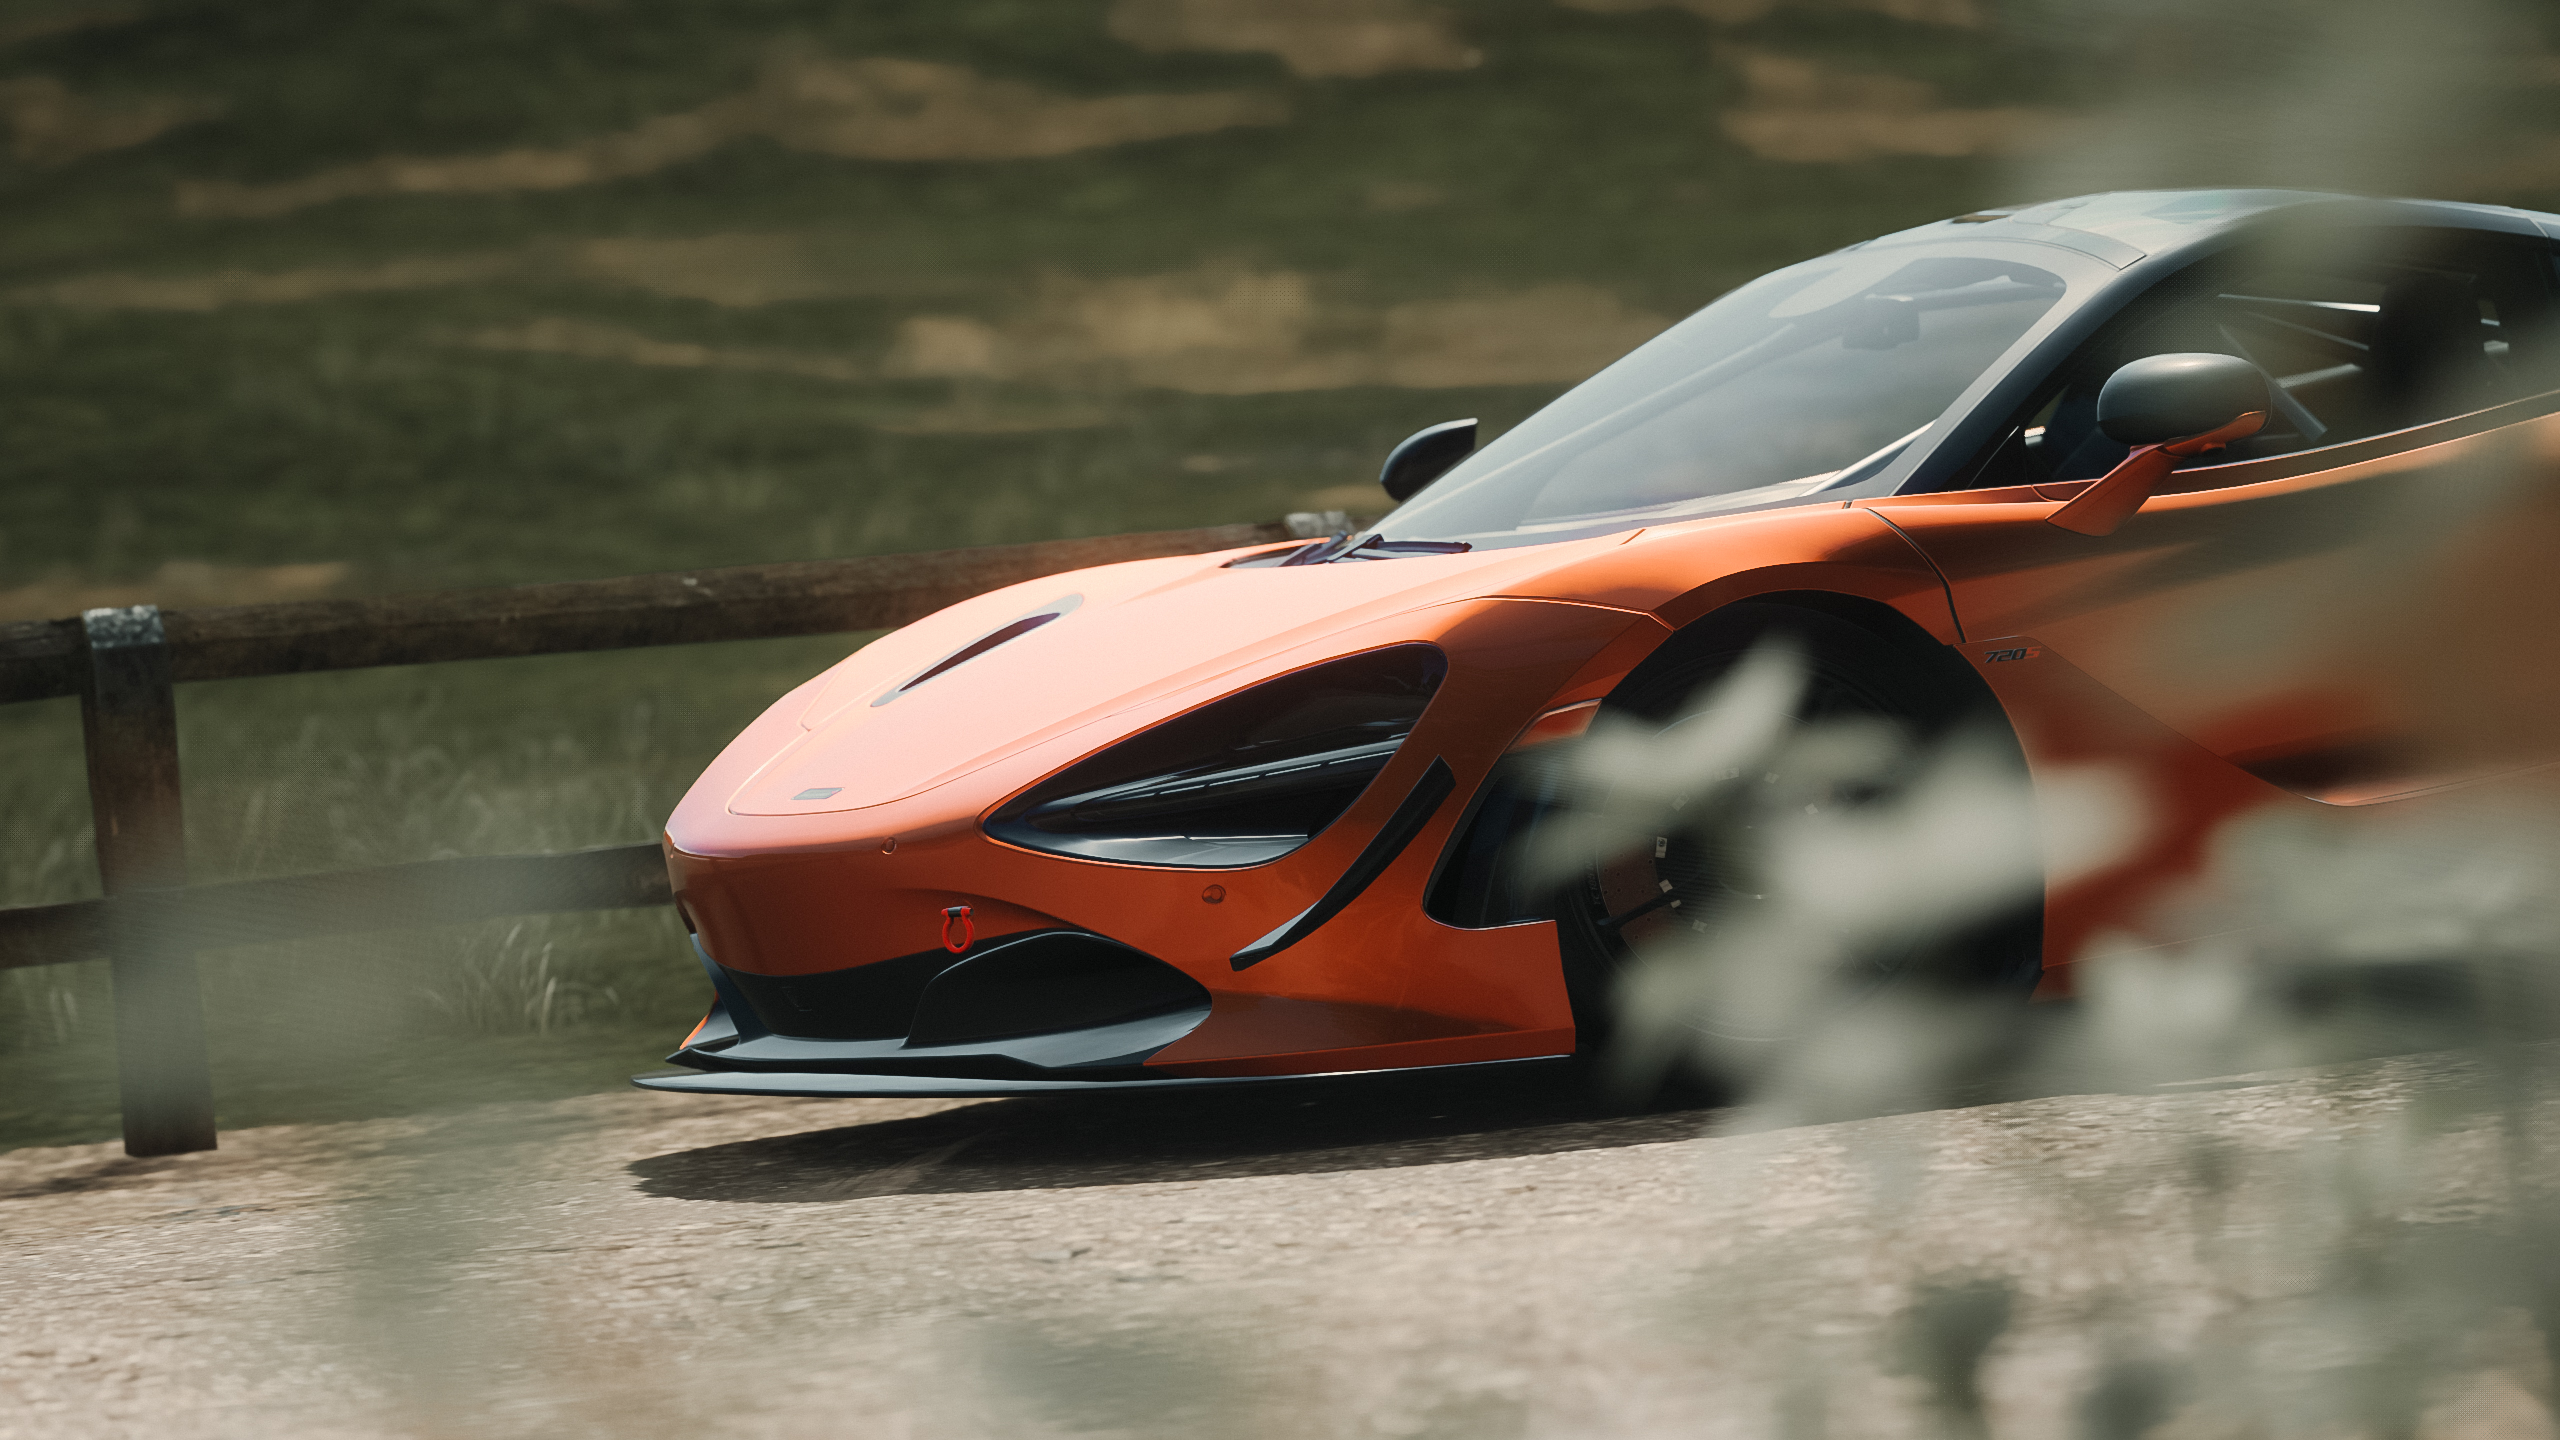 General 2560x1440 Forza Forza Horizon 4 video games Turn 10 Studios orange cars car vehicle smoke racing